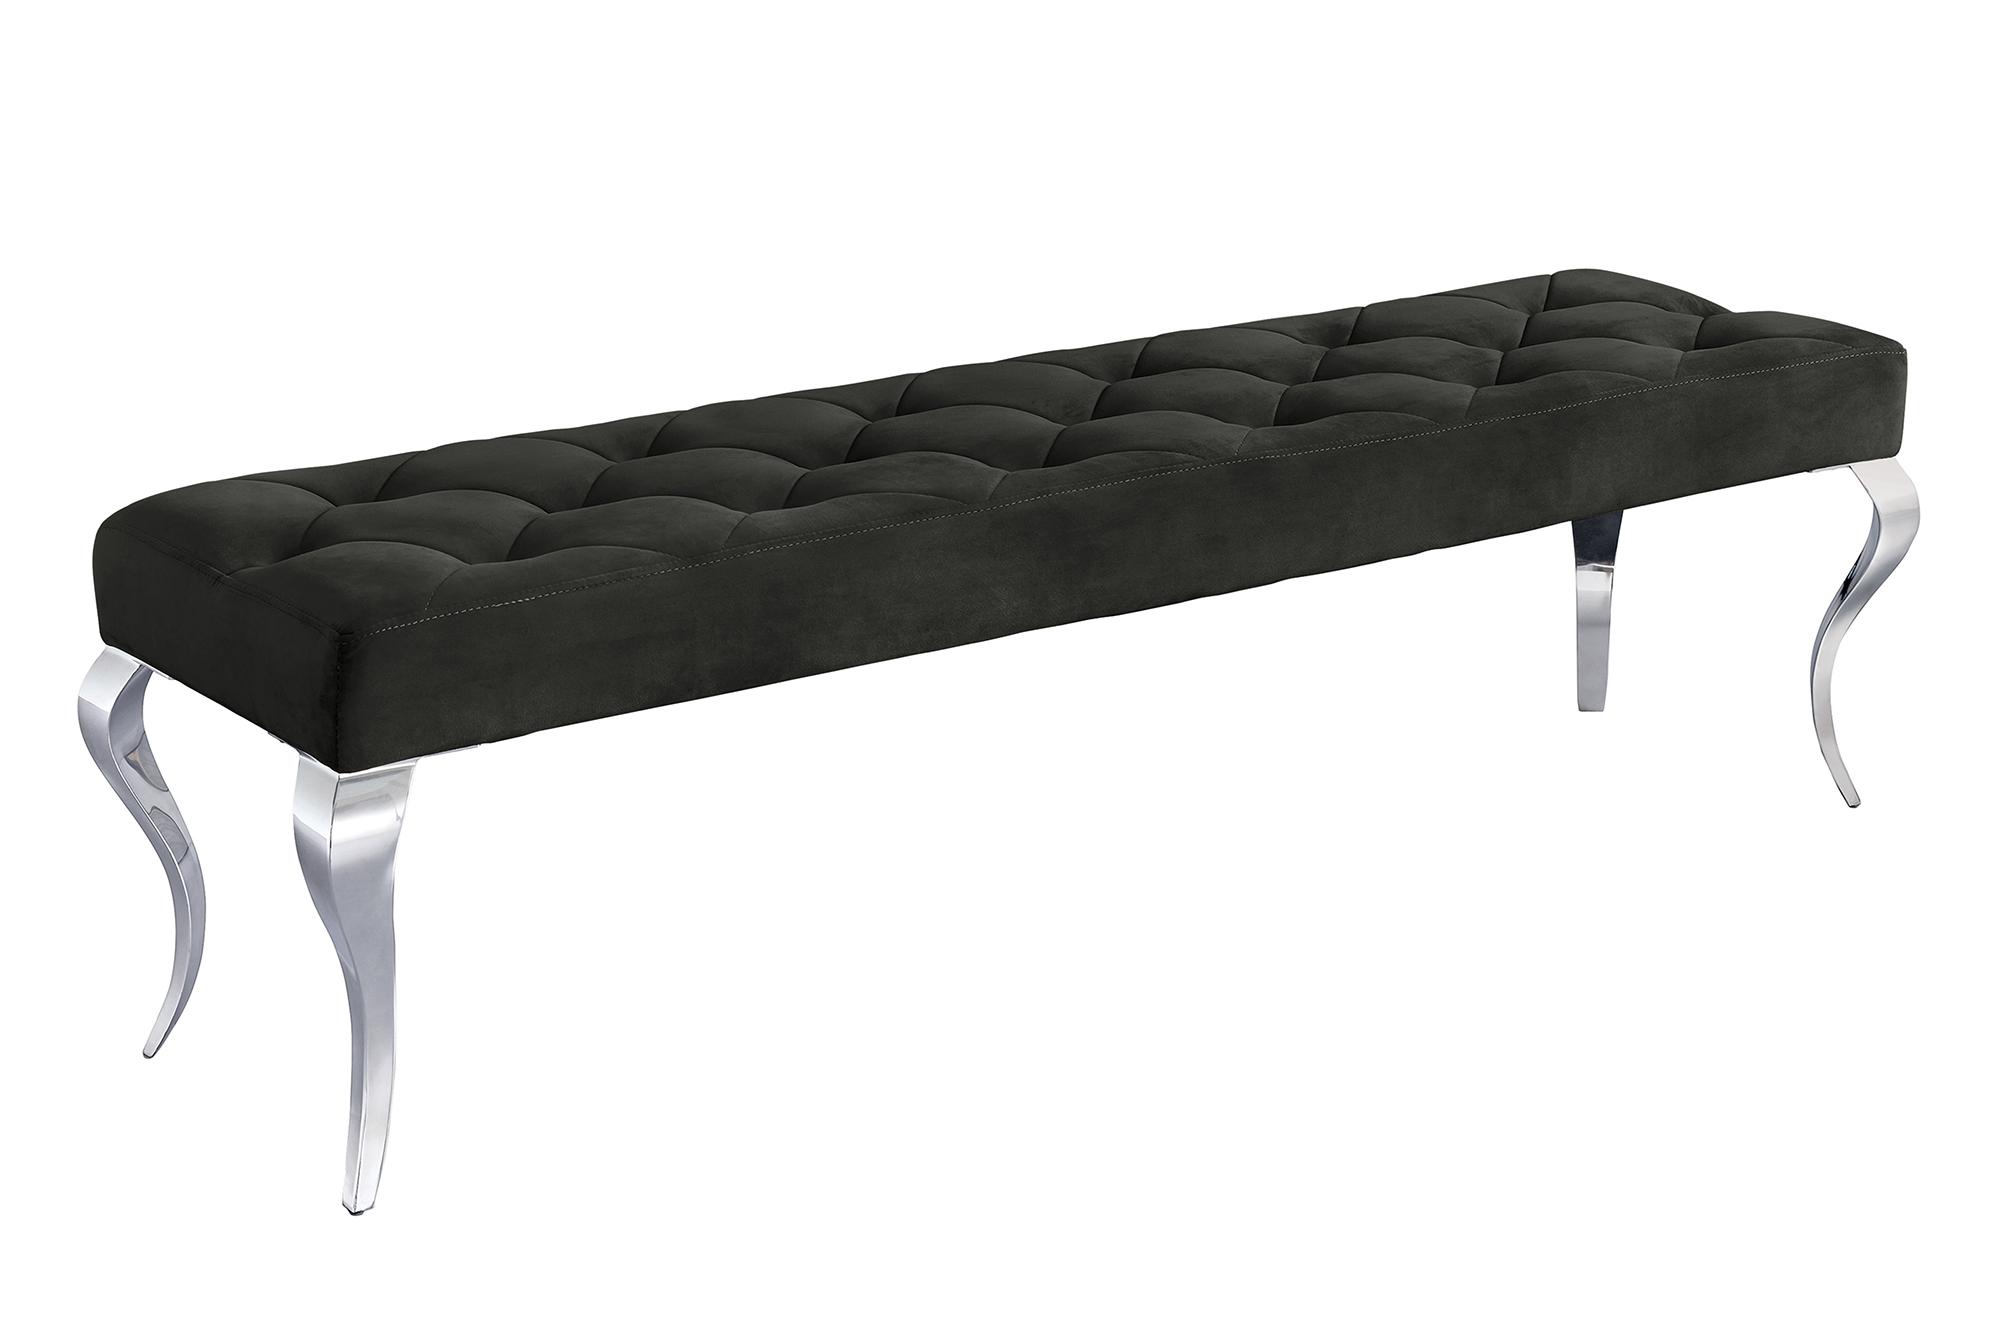 LuxD Designová lavice Rococo, 170 cm, černá